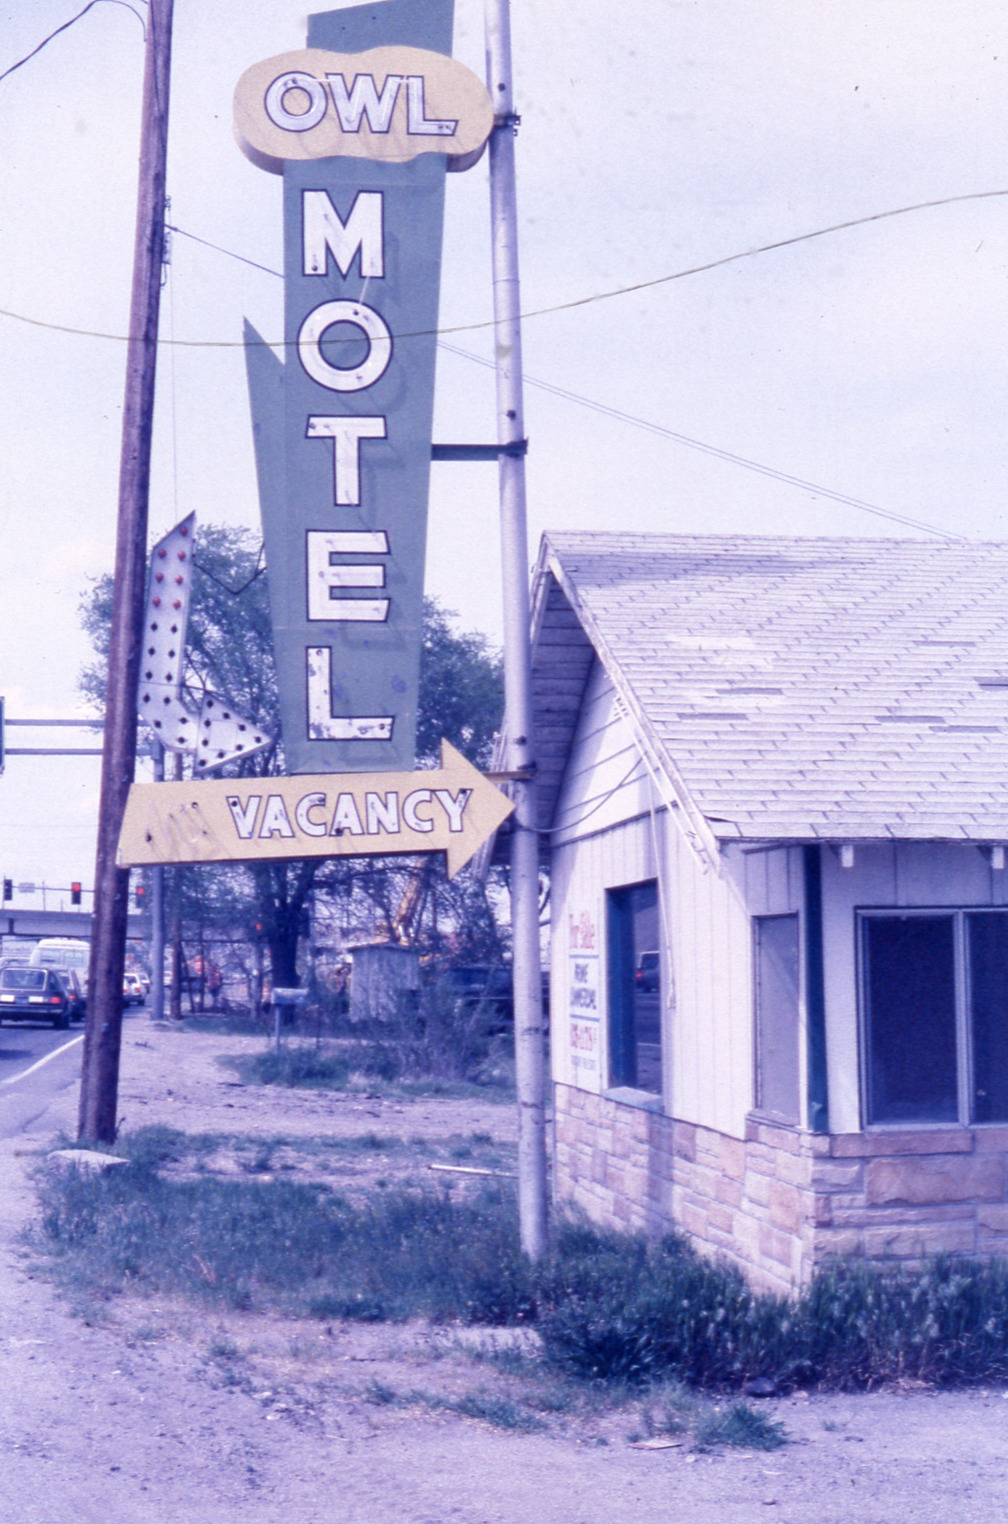 Owl Motel double mounted sign, Reno, Nevada: photographic print